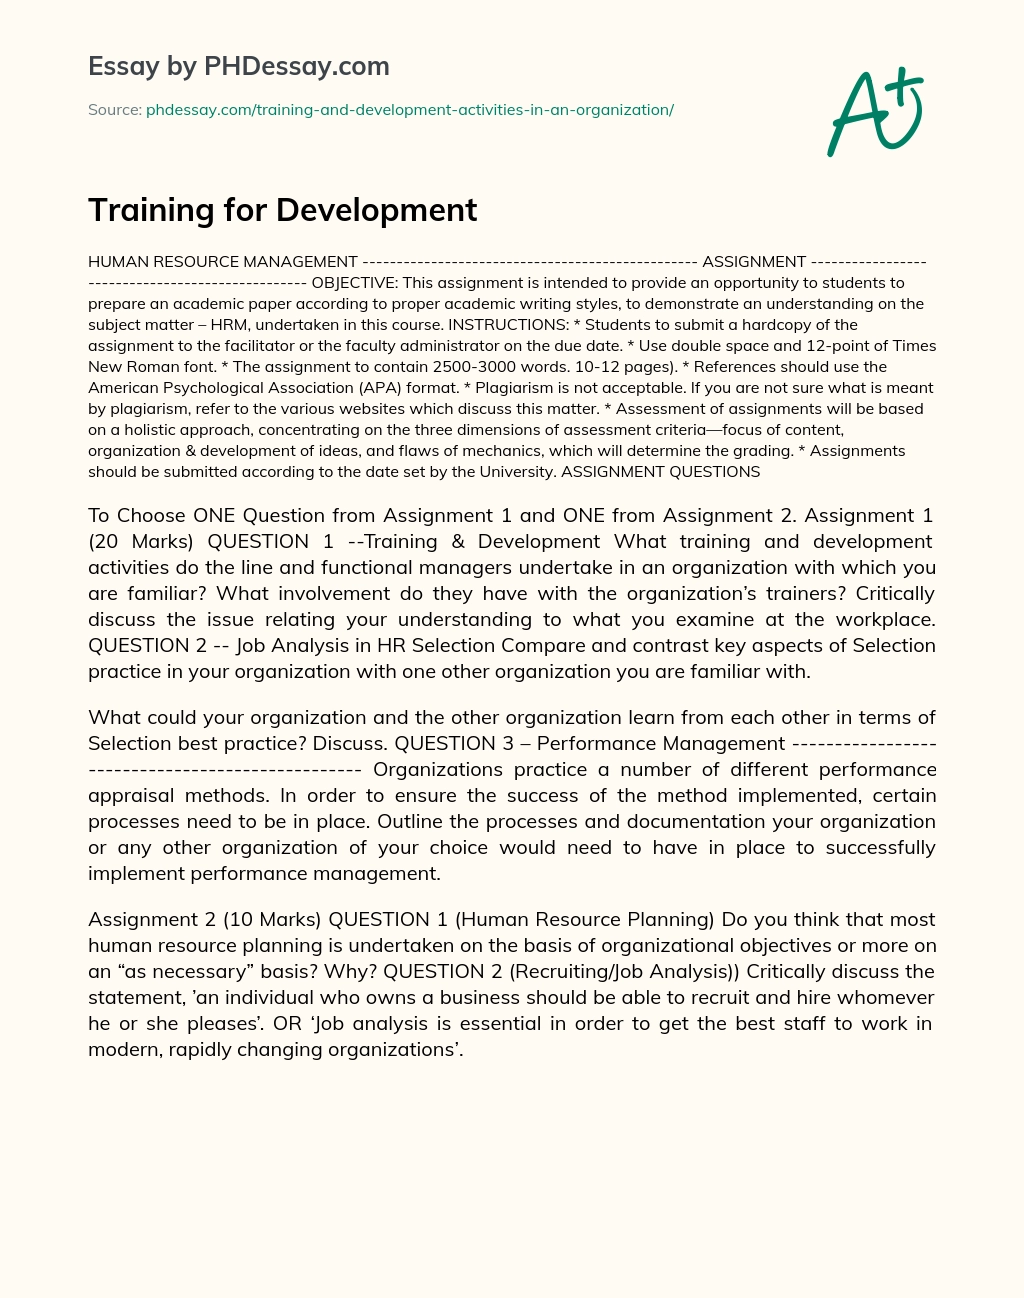 Training for Development essay